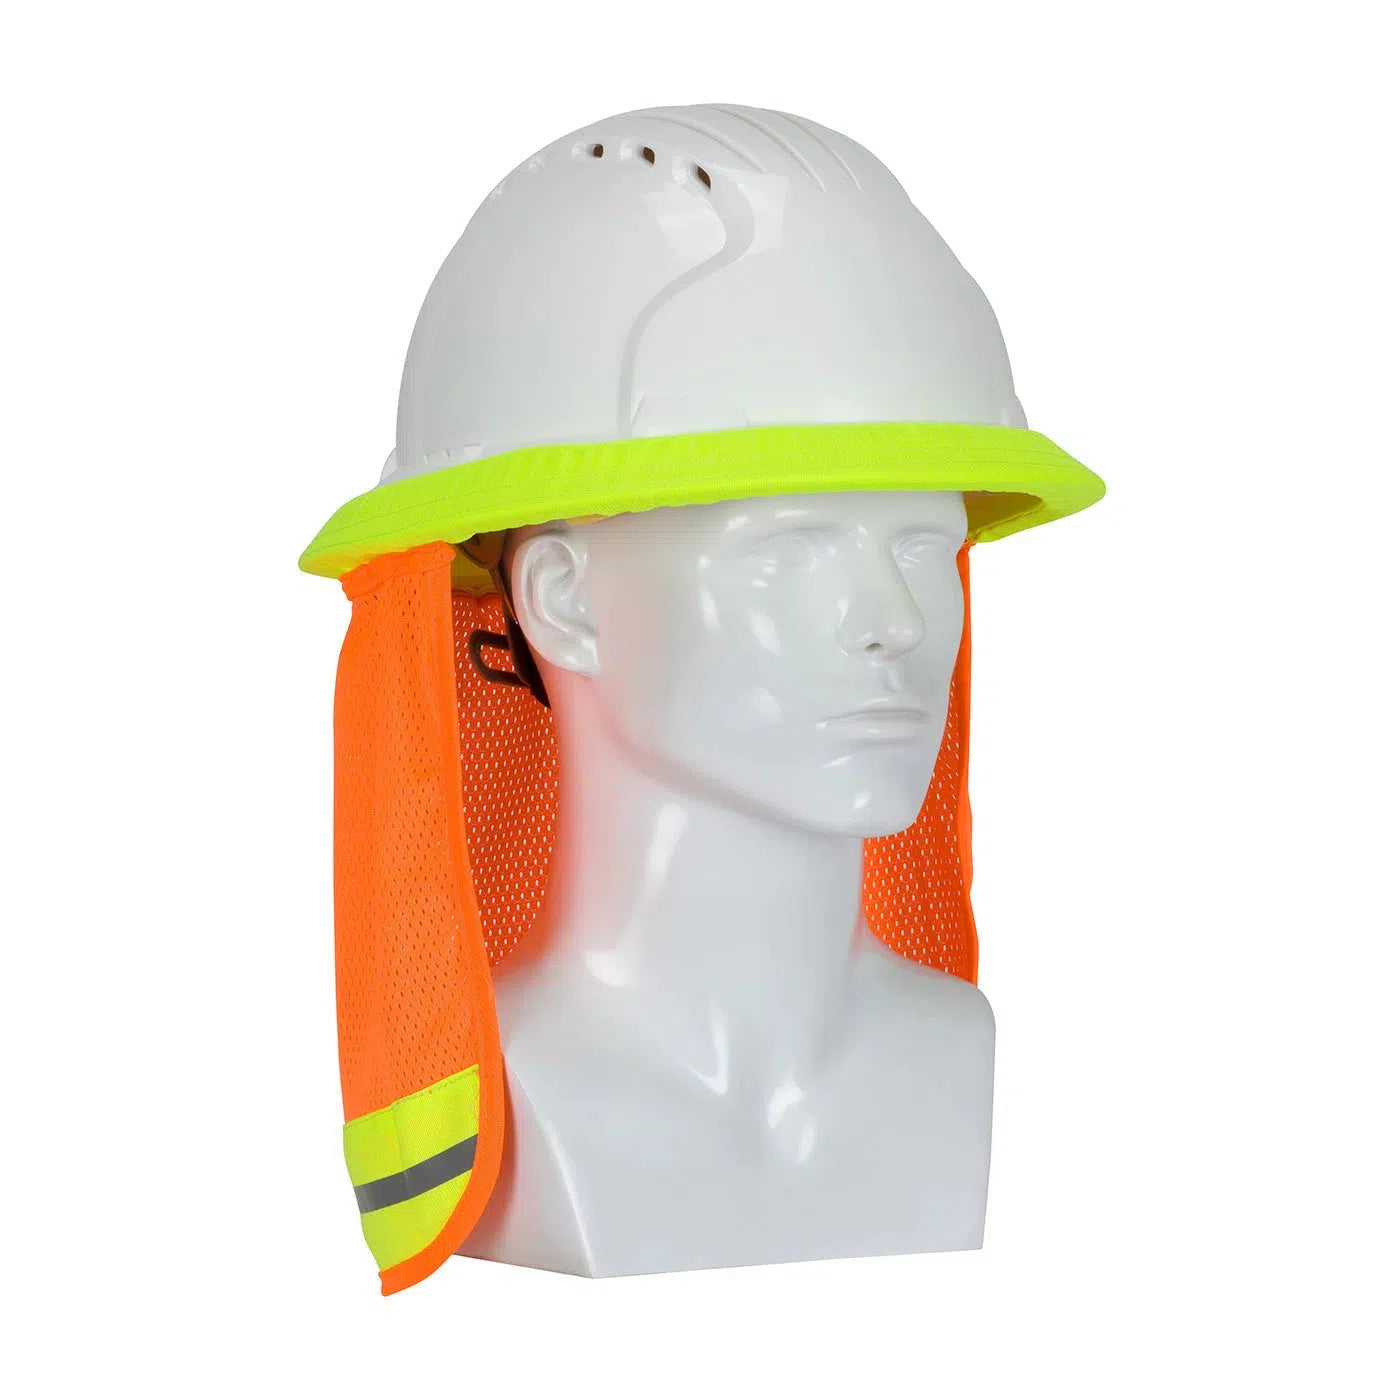 Helmet neck cover